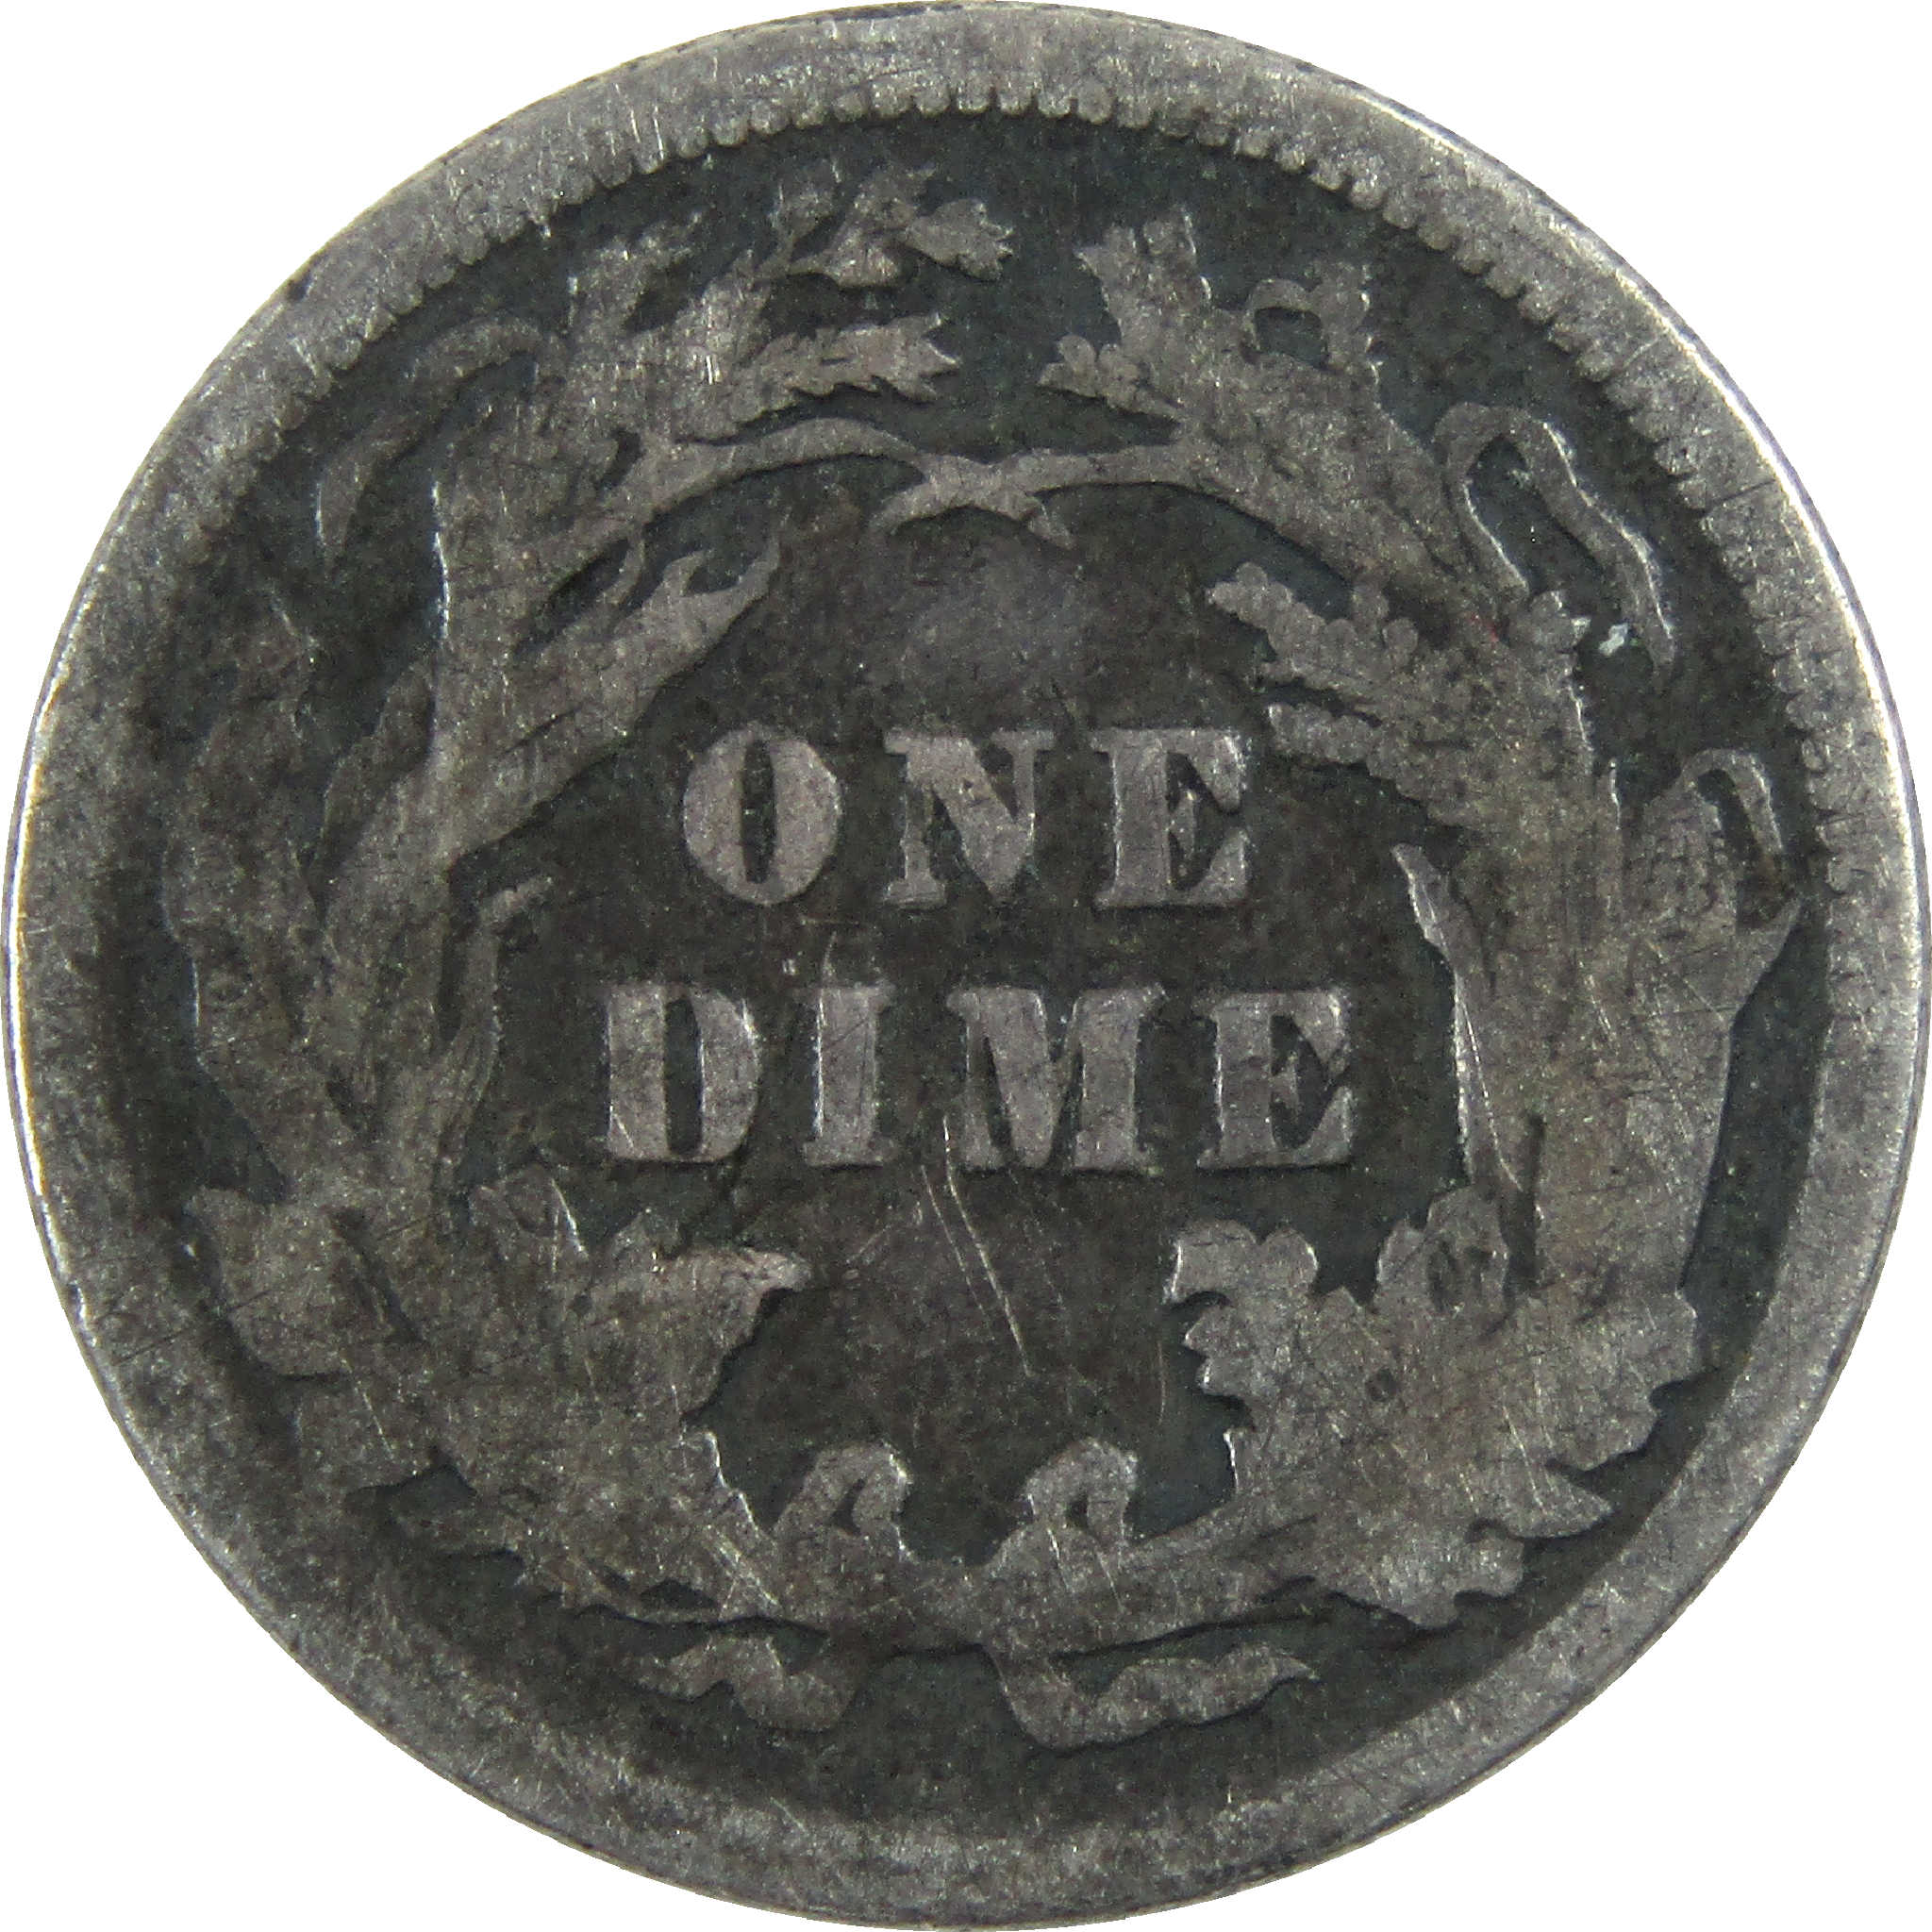 1891 Seated Liberty Dime F Fine Silver 10c Coin SKU:I12265